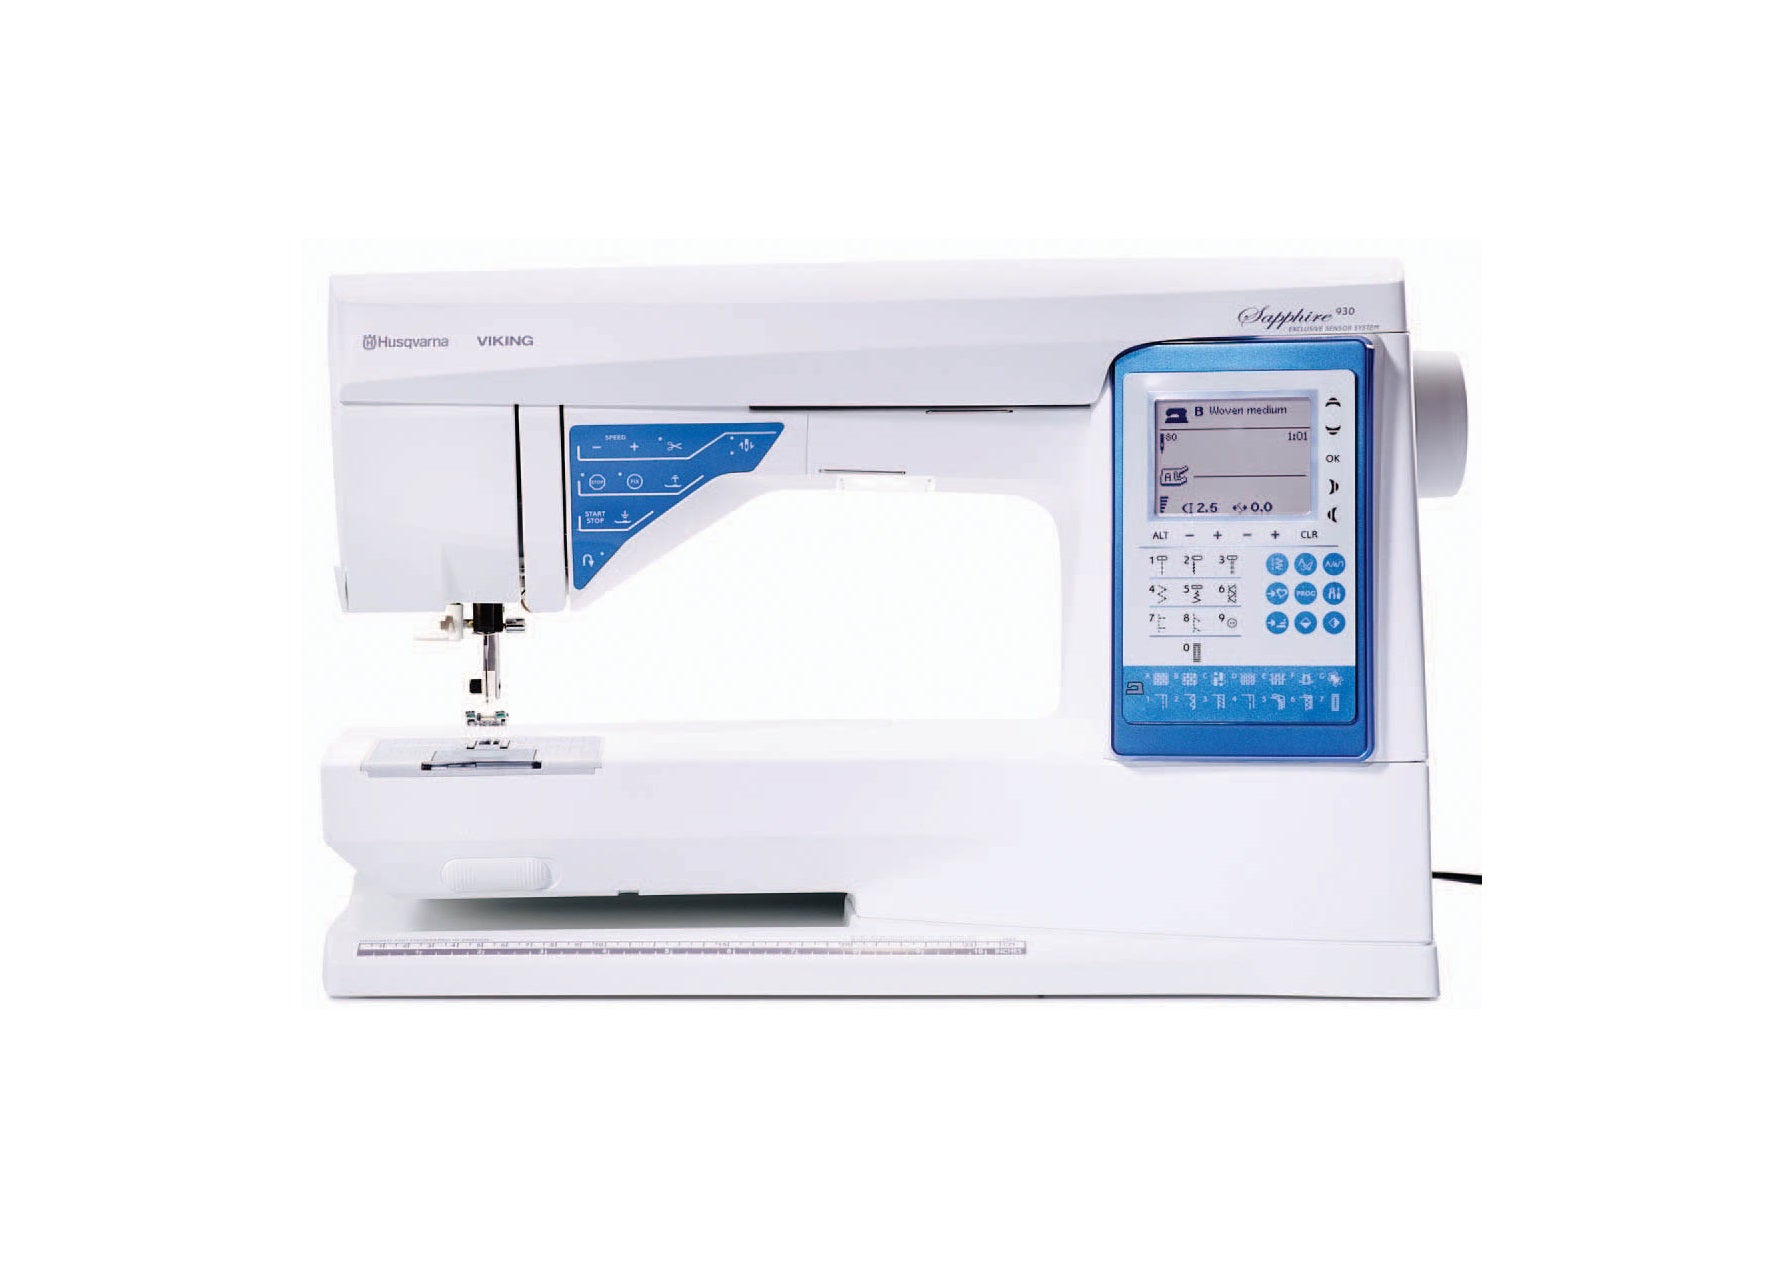 Husqvarna Viking SAPPHIRE™ 930 Sewing Machine for Sale at World Weidner